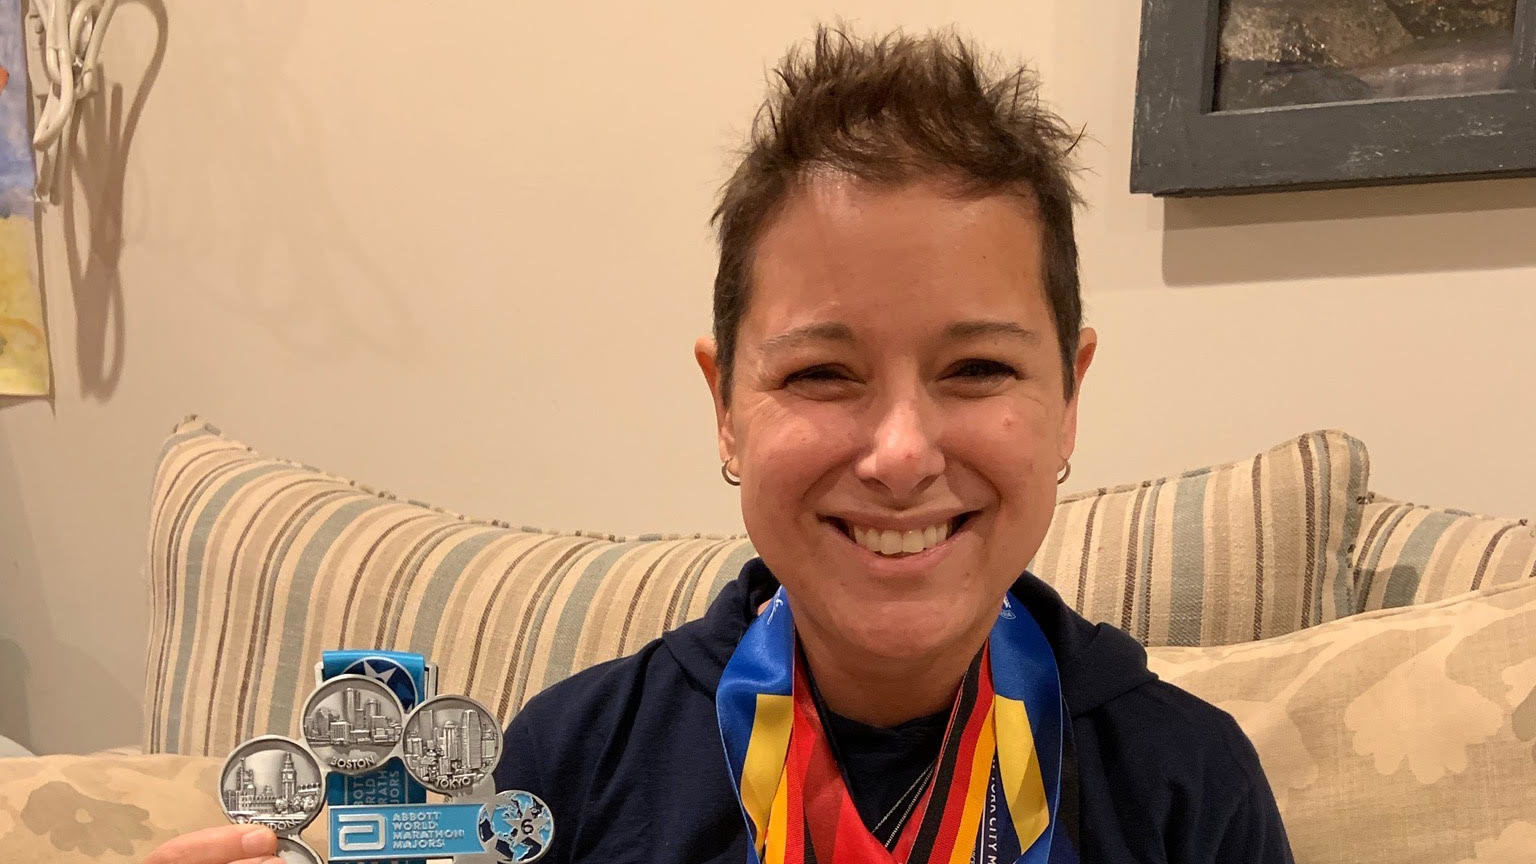 Renee Seman ran six of the worldâ€™s major marathons after she learned she had breast cancer